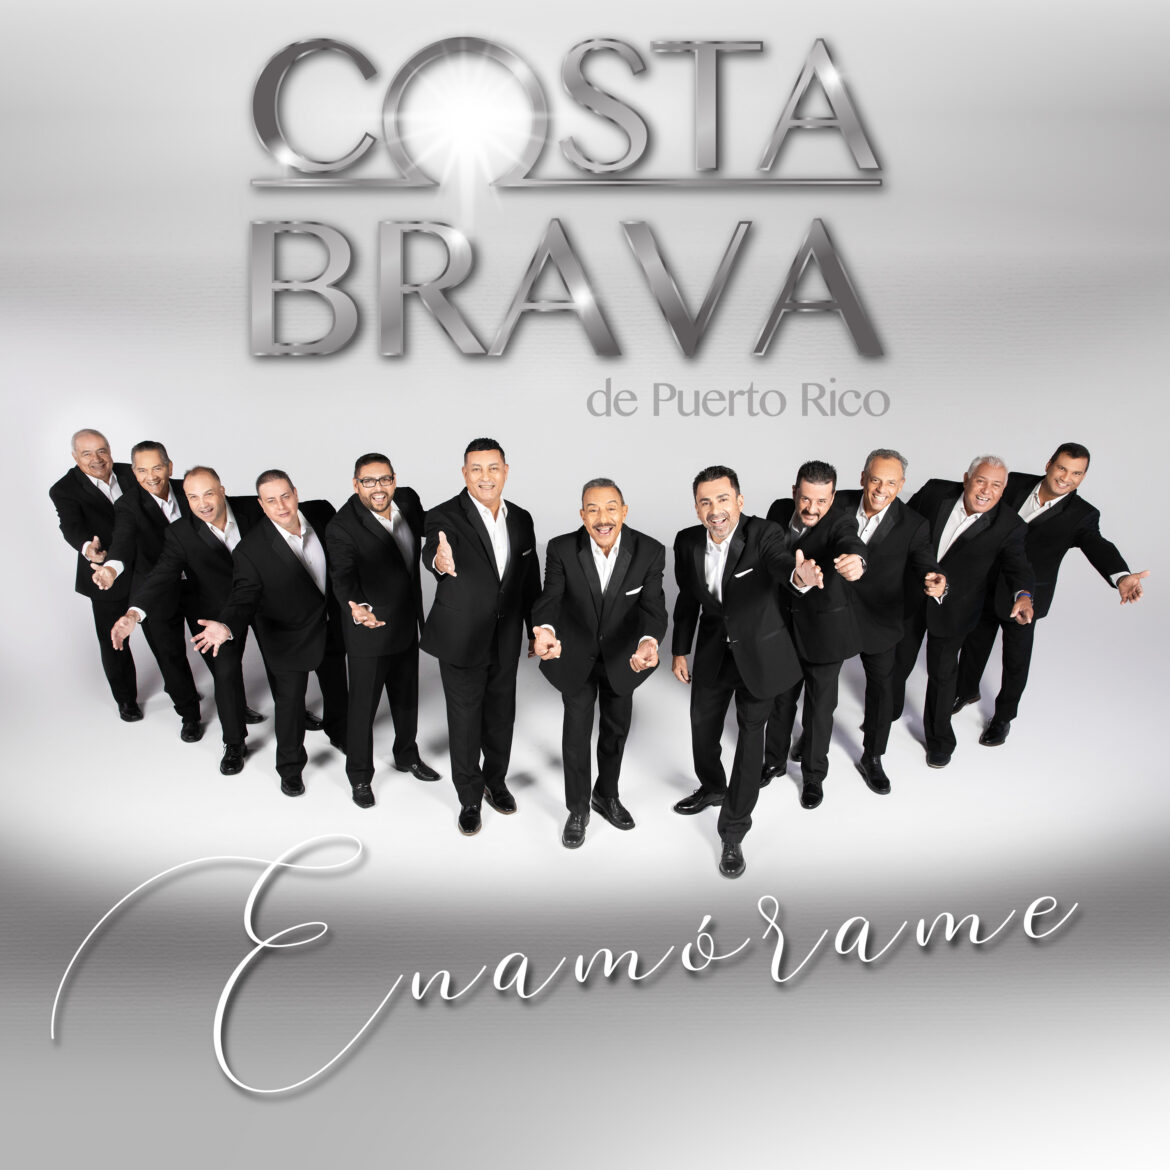 Costa Brava presenta su nuevo sencillo “Enamórate”